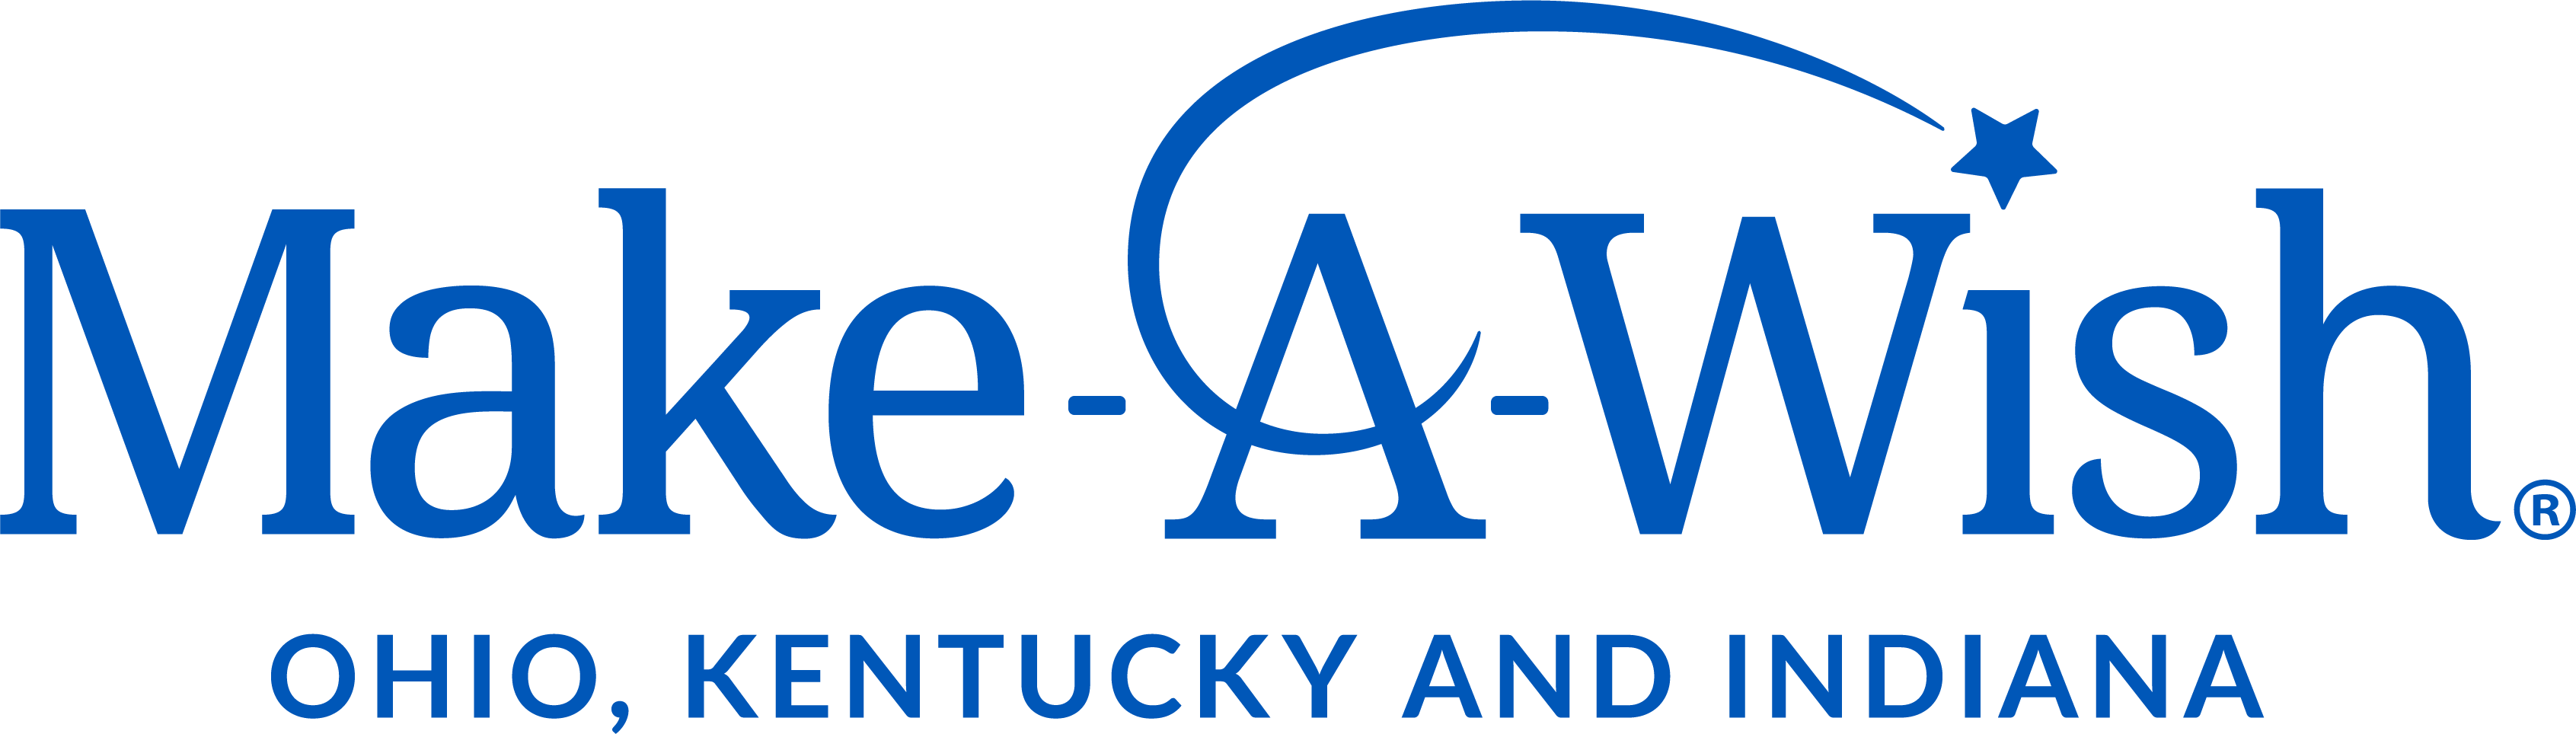 Make-A-Wish Ohio Kentucky Indiana PRIMARY Logo - Copy